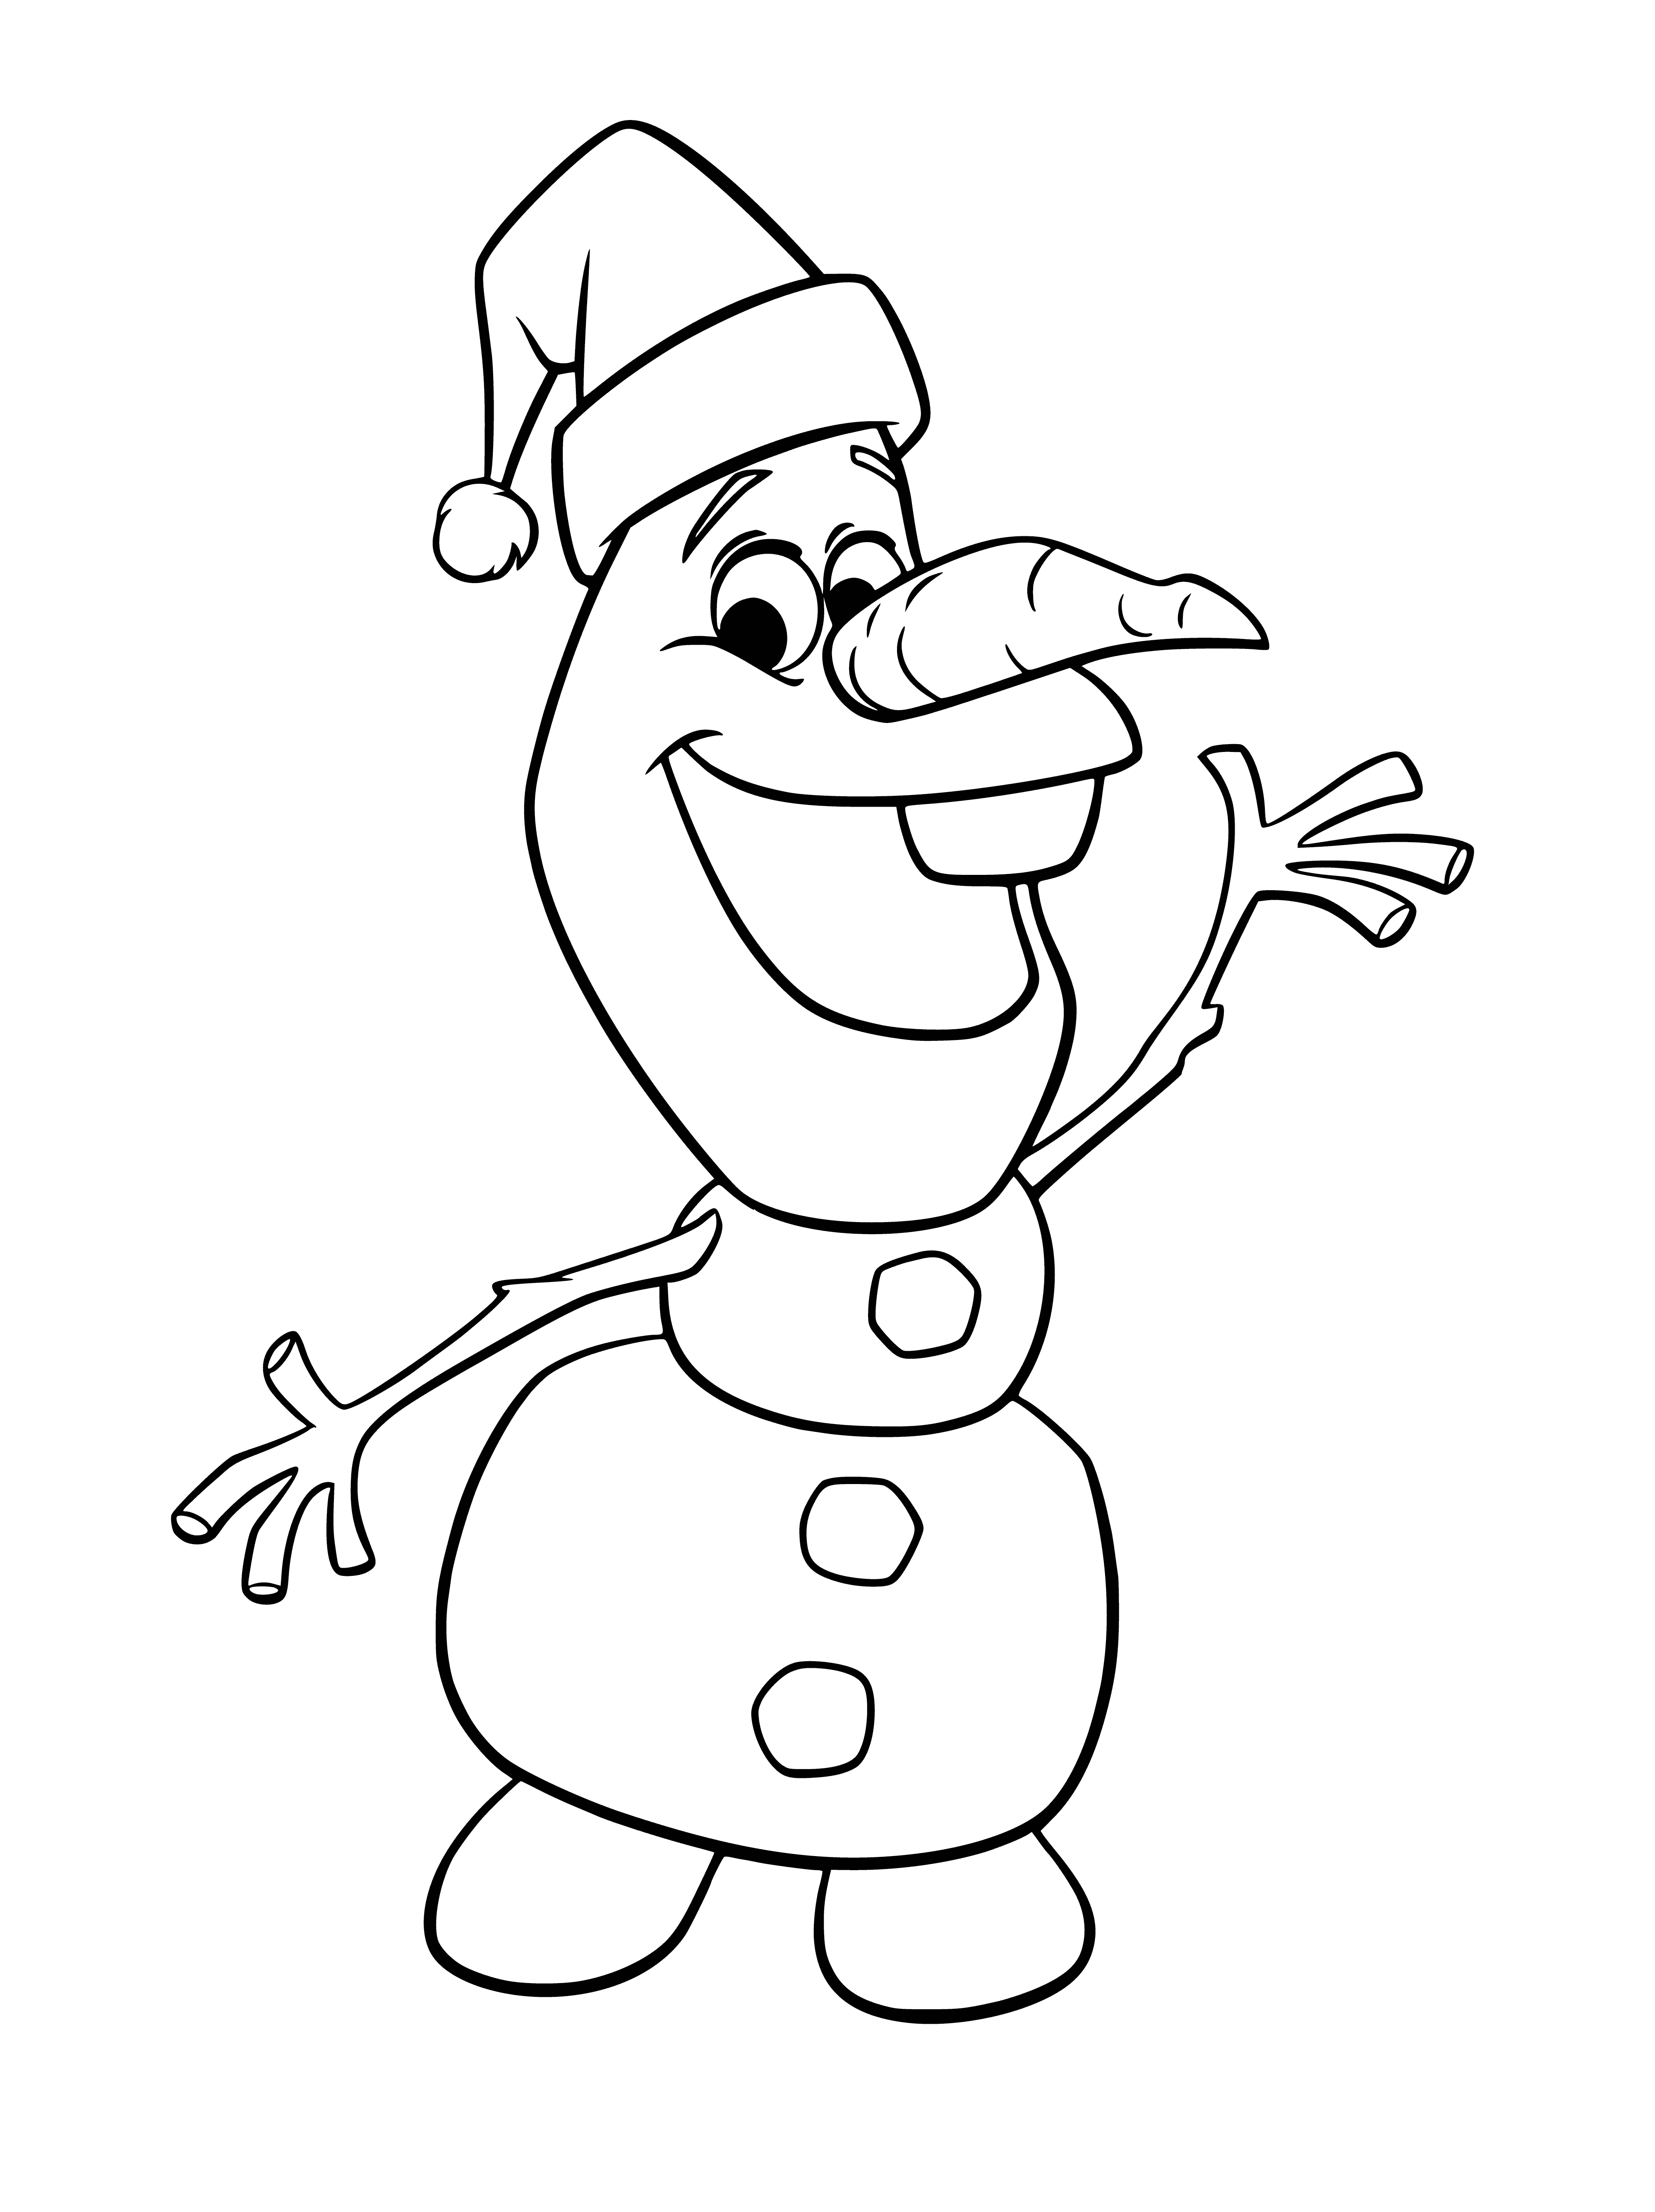 Bonhomme de neige Olaf coloriage